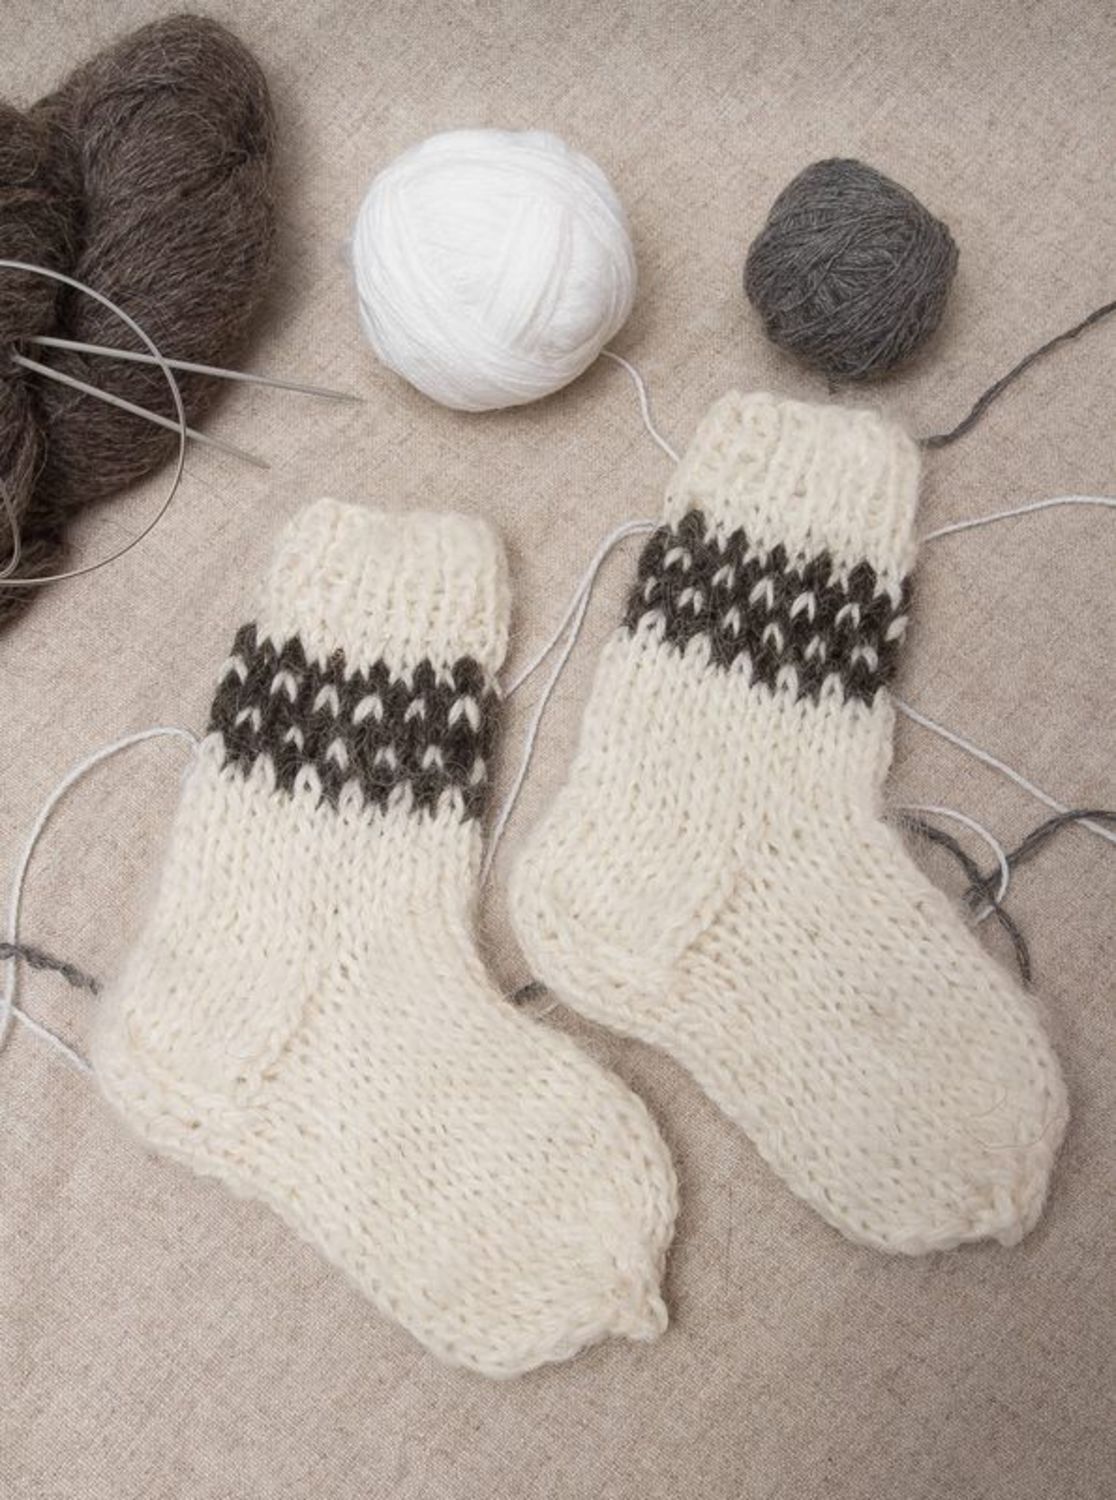 Calzini di lana fatti a mano per bambini Calzini caldi Calzini a maglia foto 1